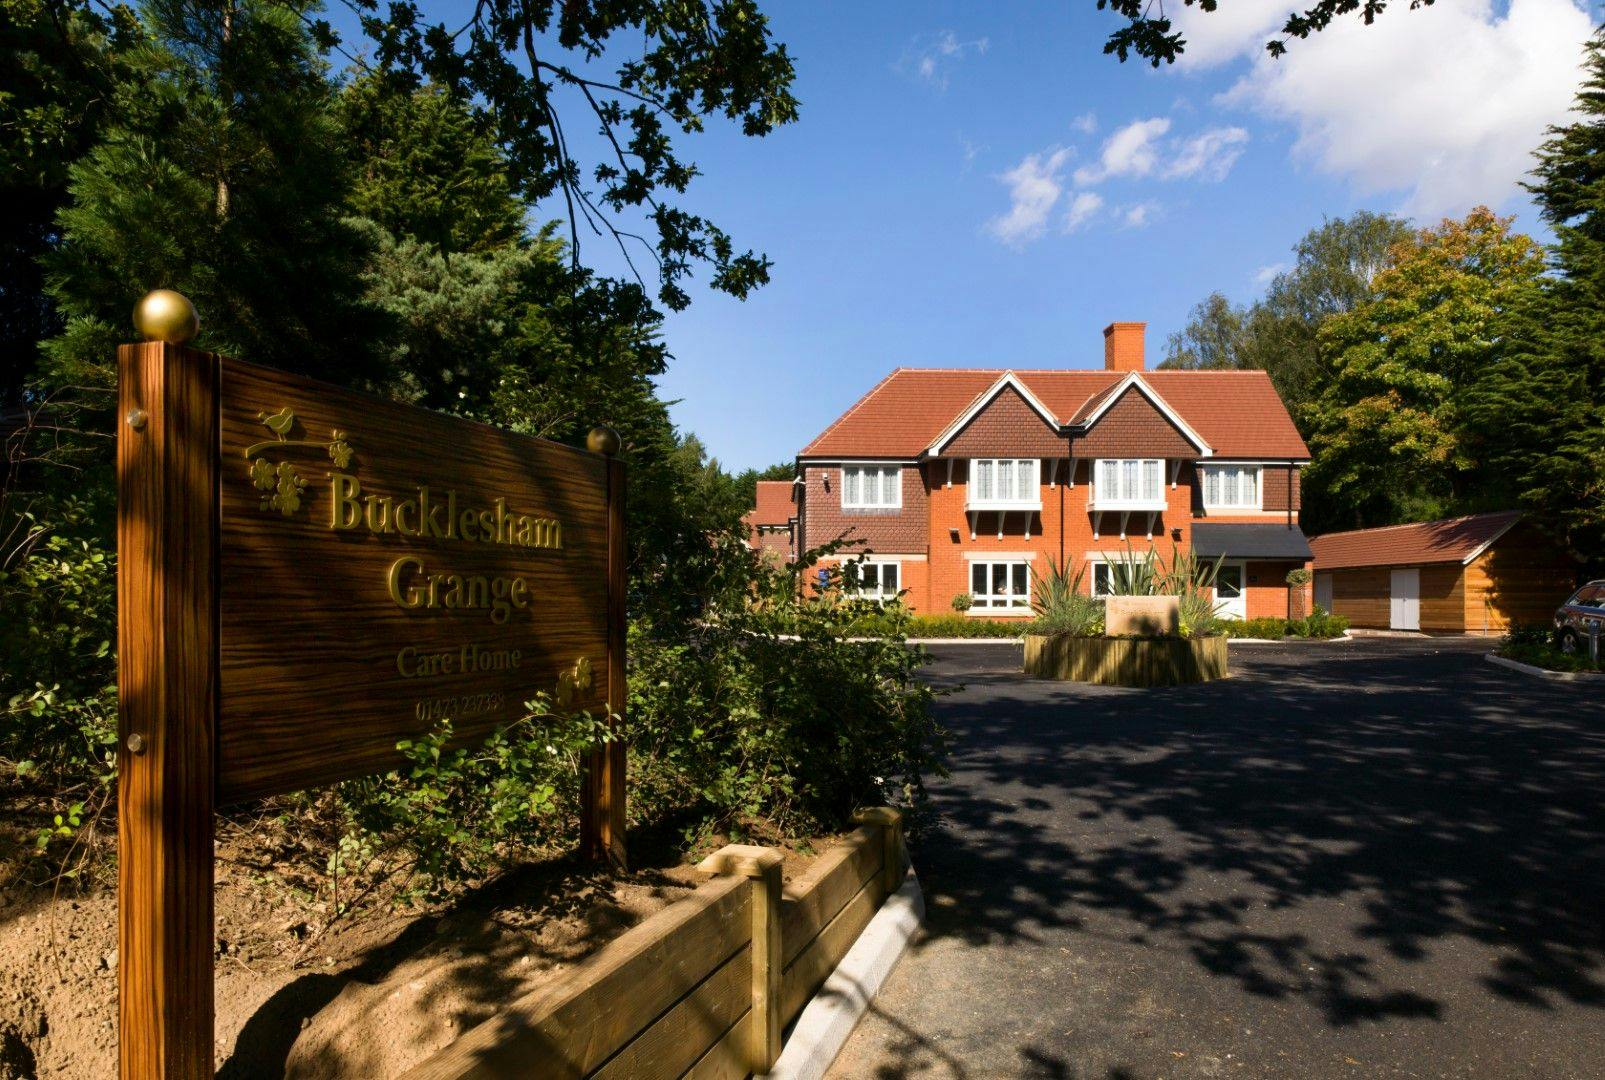 Bucklesham Grange Care Home in Ipswich